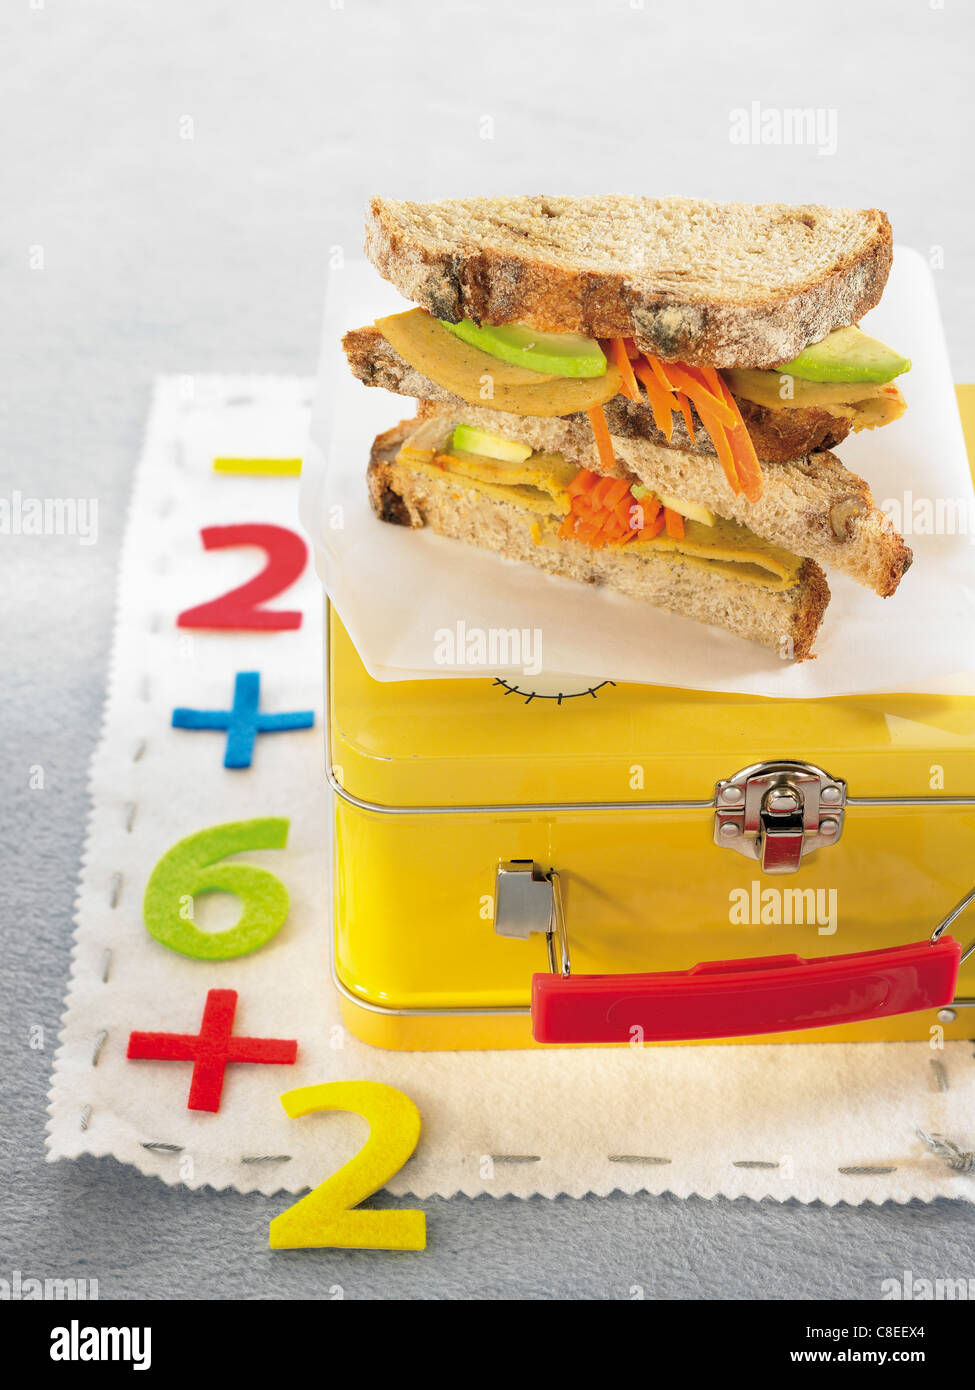 Wholemeal bread sandwich Stock Photo